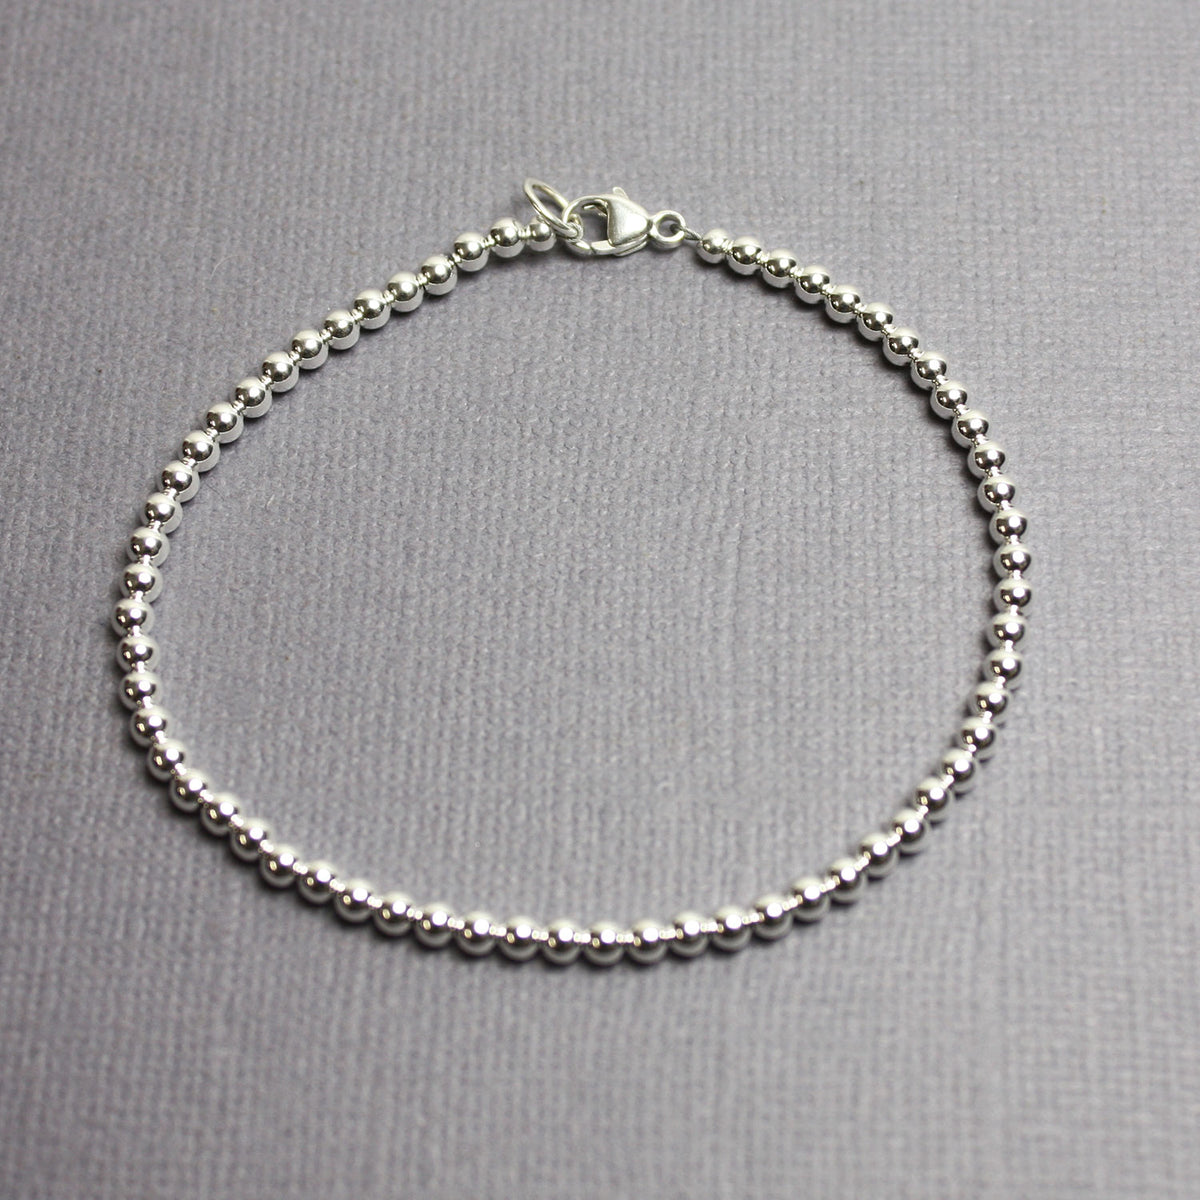 3mm Aged Sterling Silver Beads Bracelet